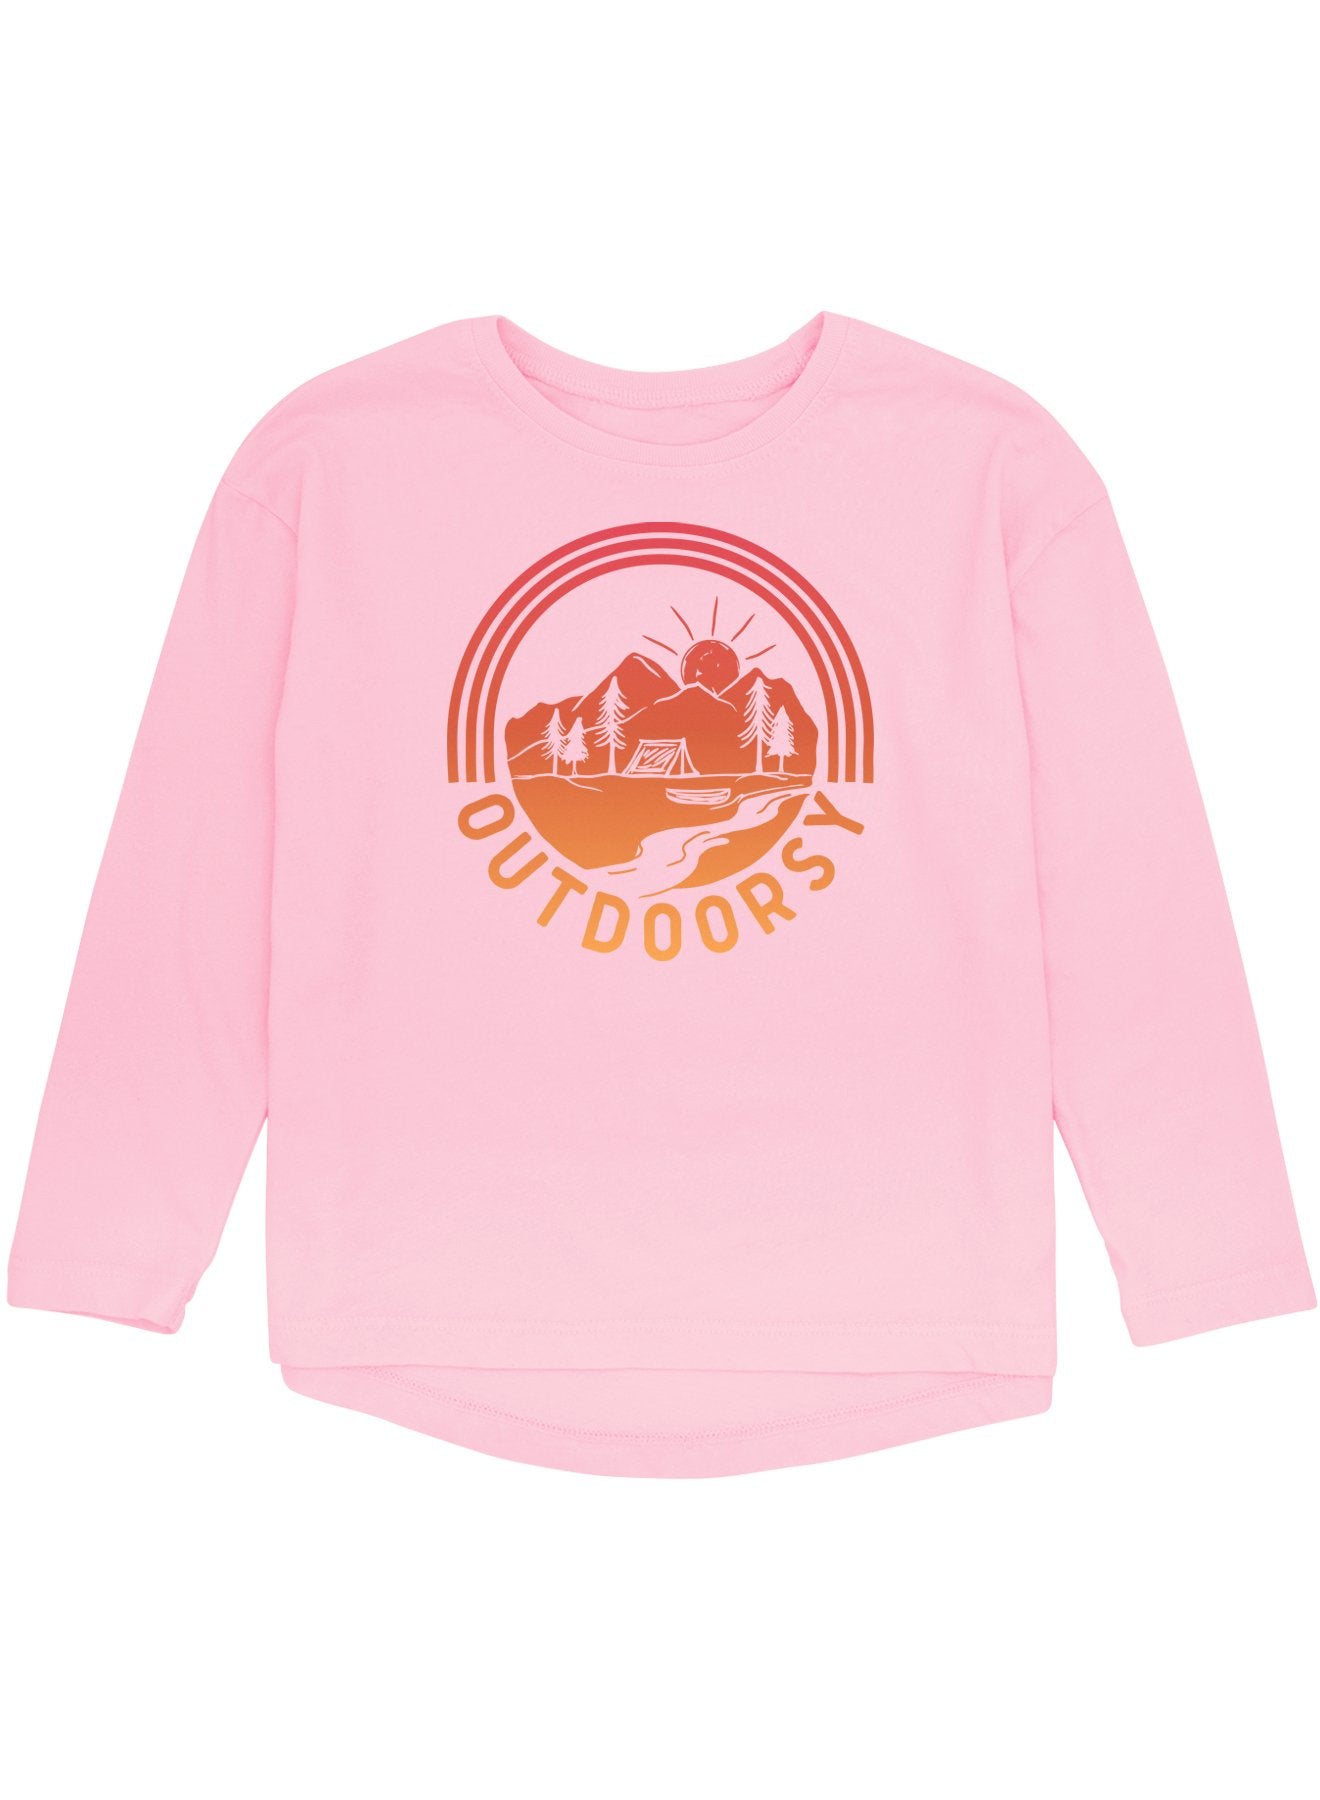 Outdoorsy Long Sleeve Kora Tee  - Doodlebug's Children's Boutique